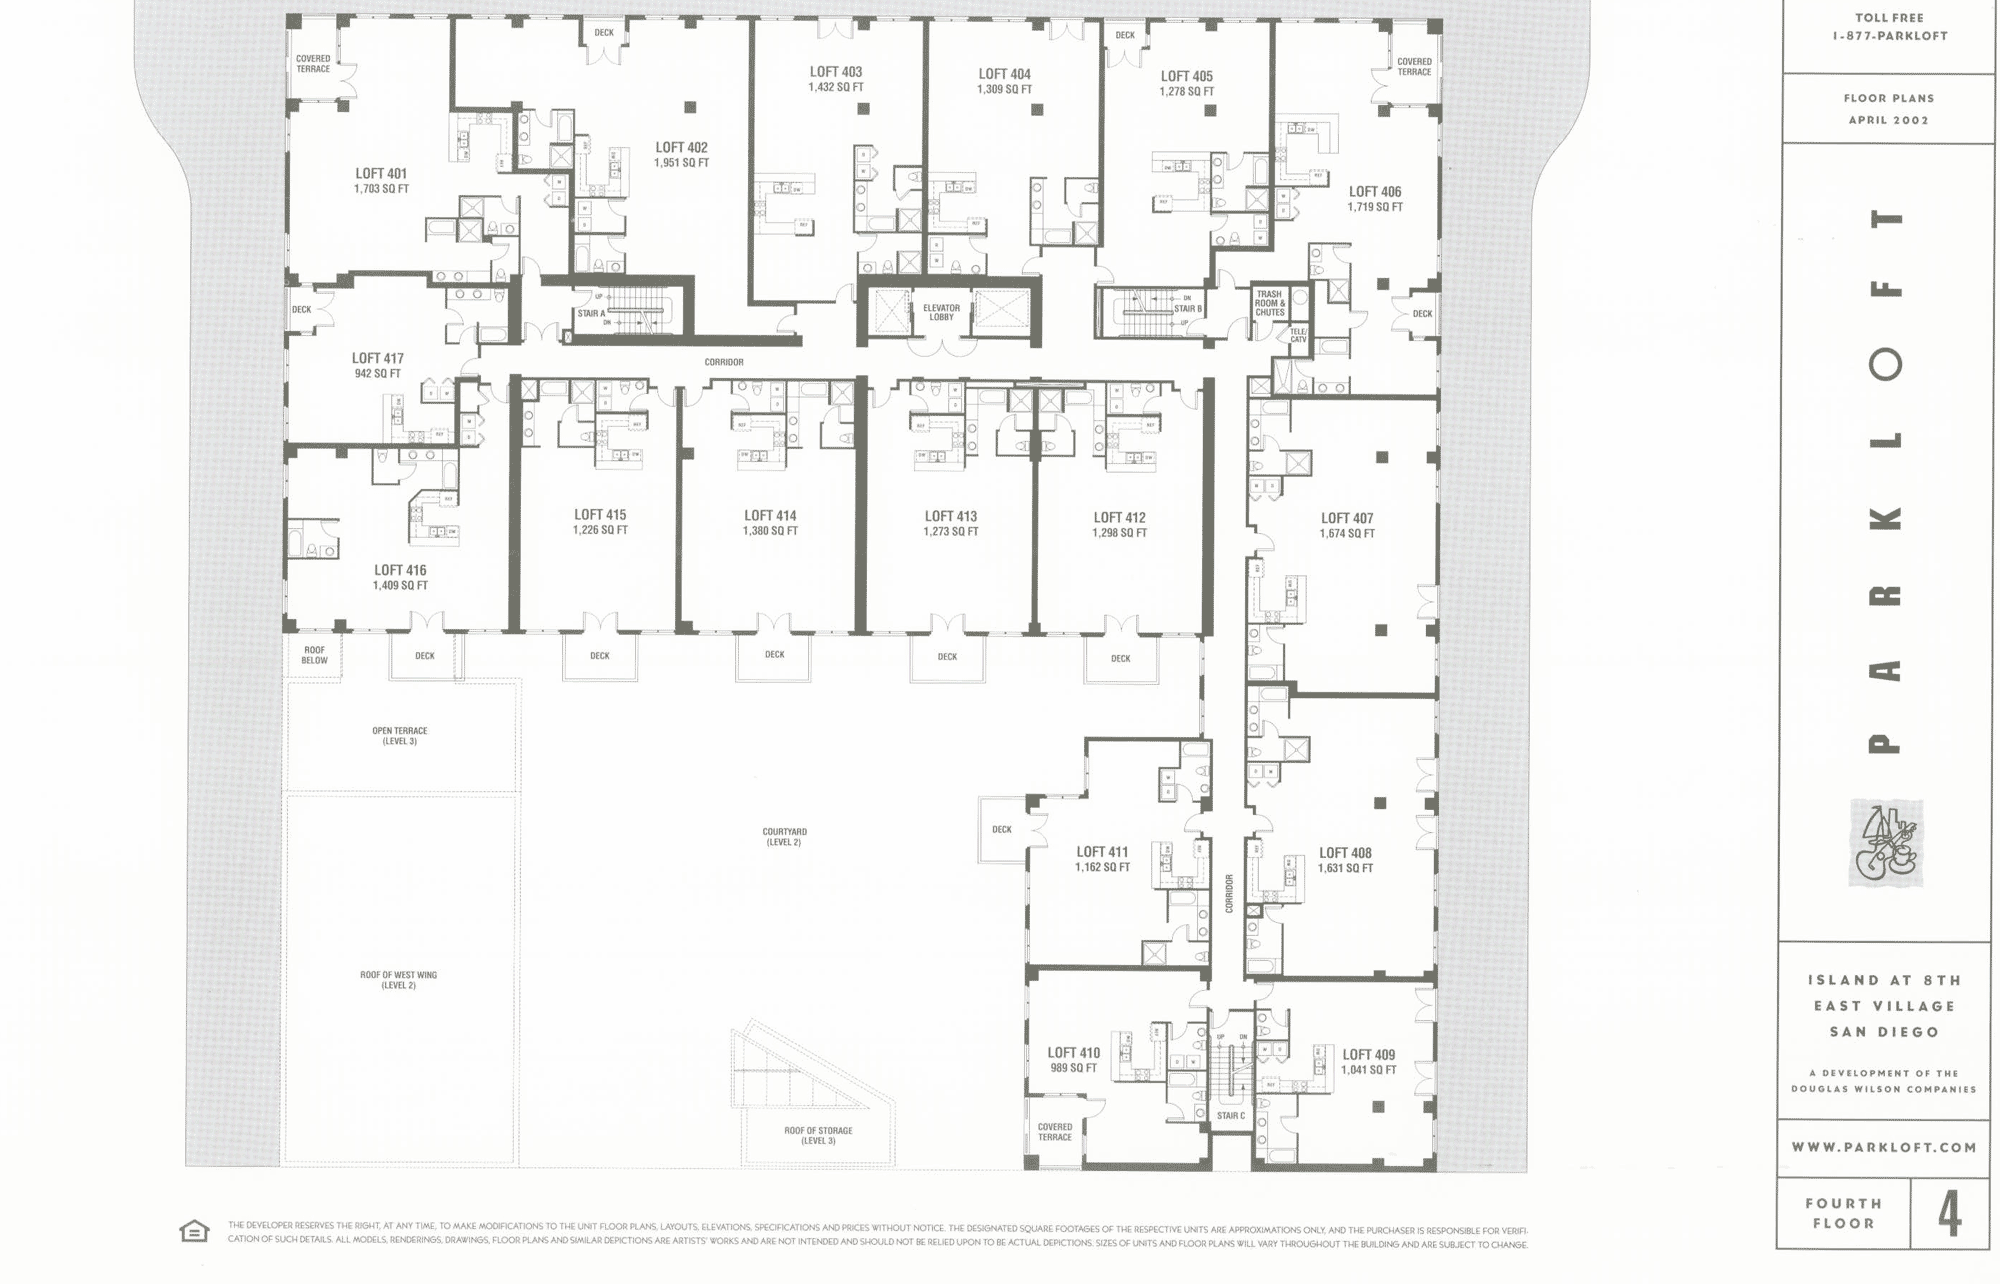 Parkloft Floor Plan 4th Floor